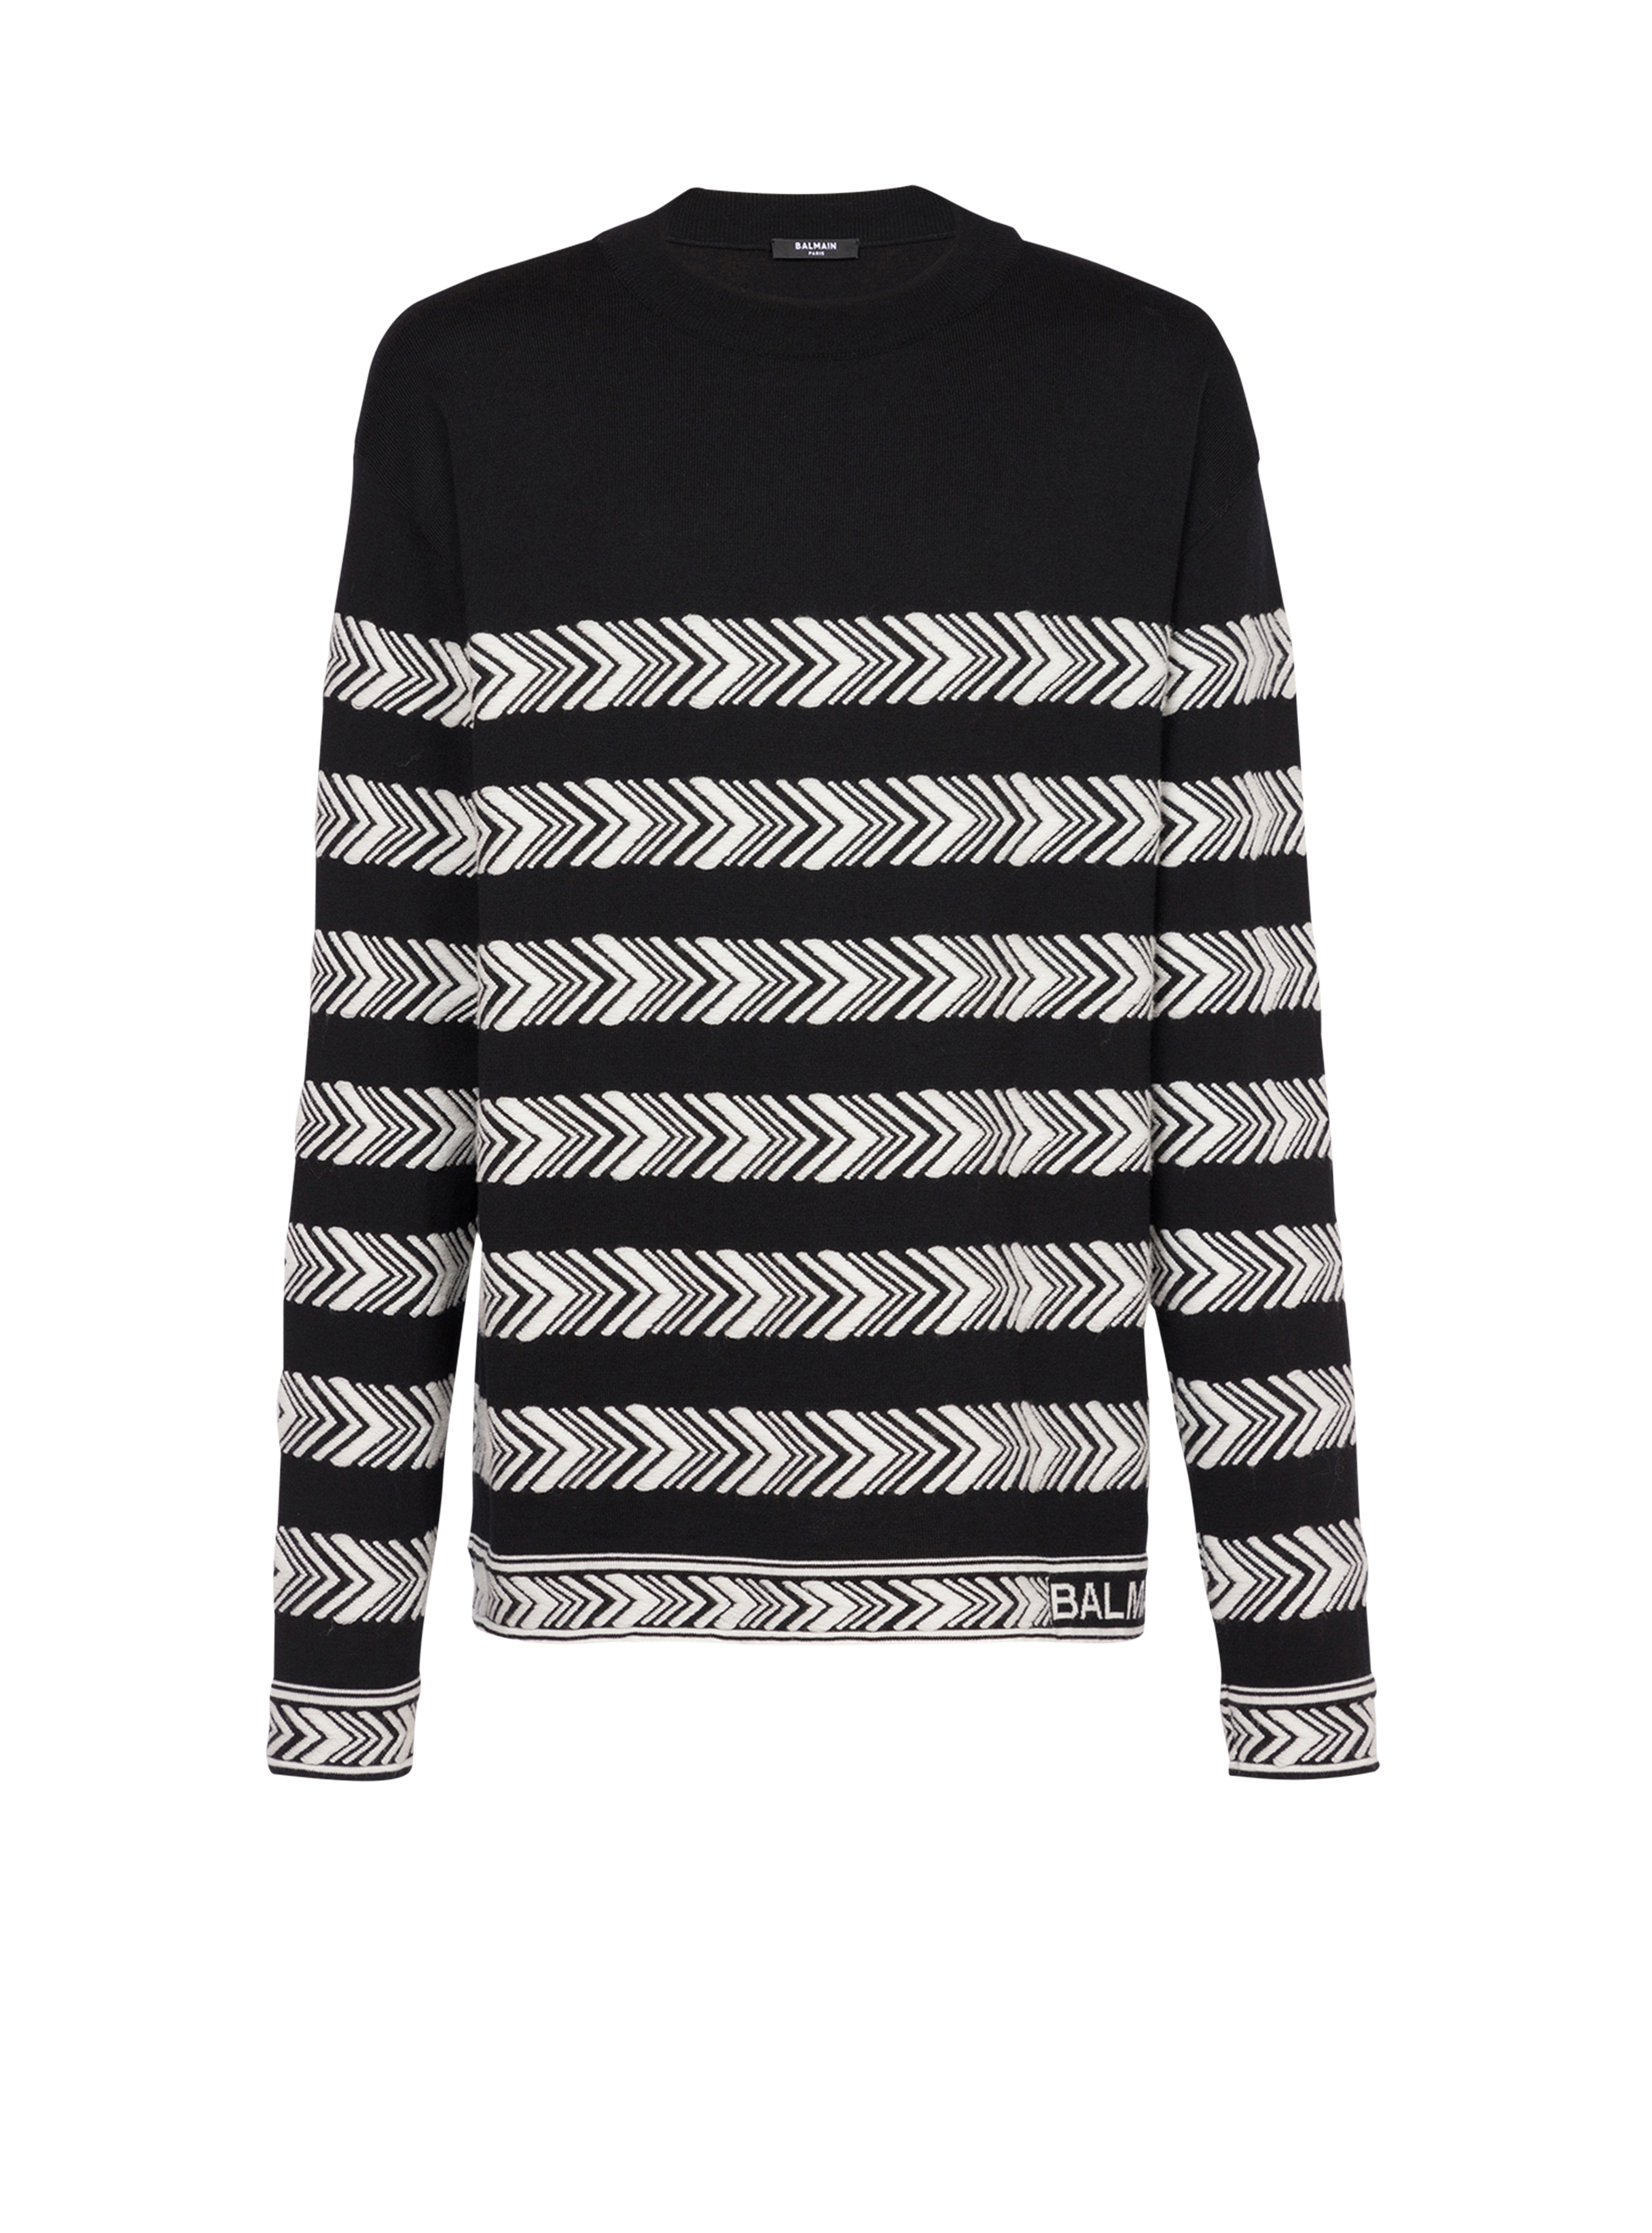 Chevron wool sweater, black, hi-res